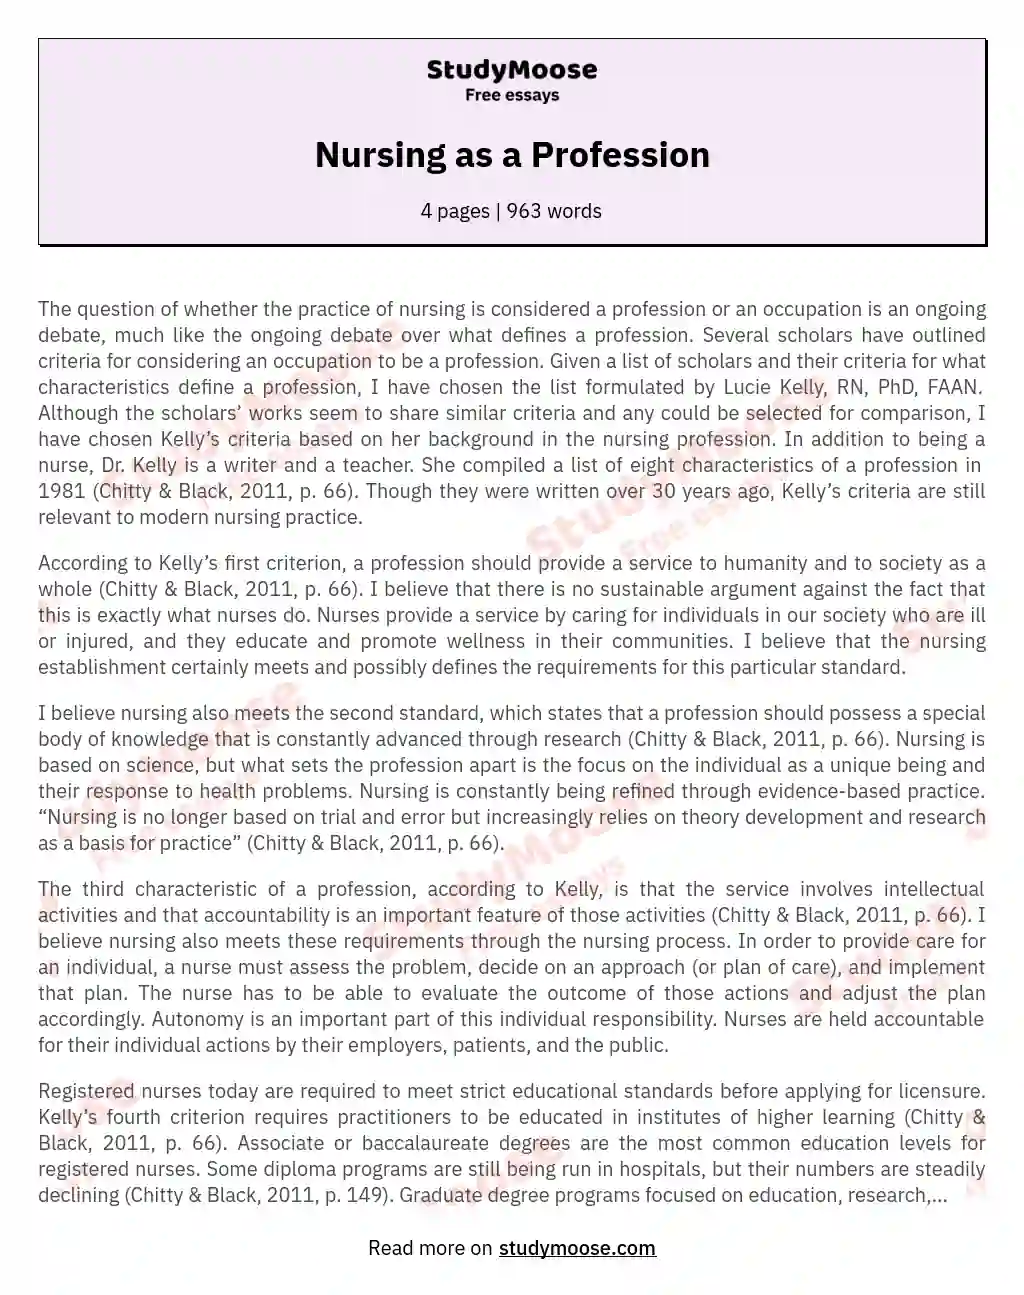 Nursing as a Profession essay